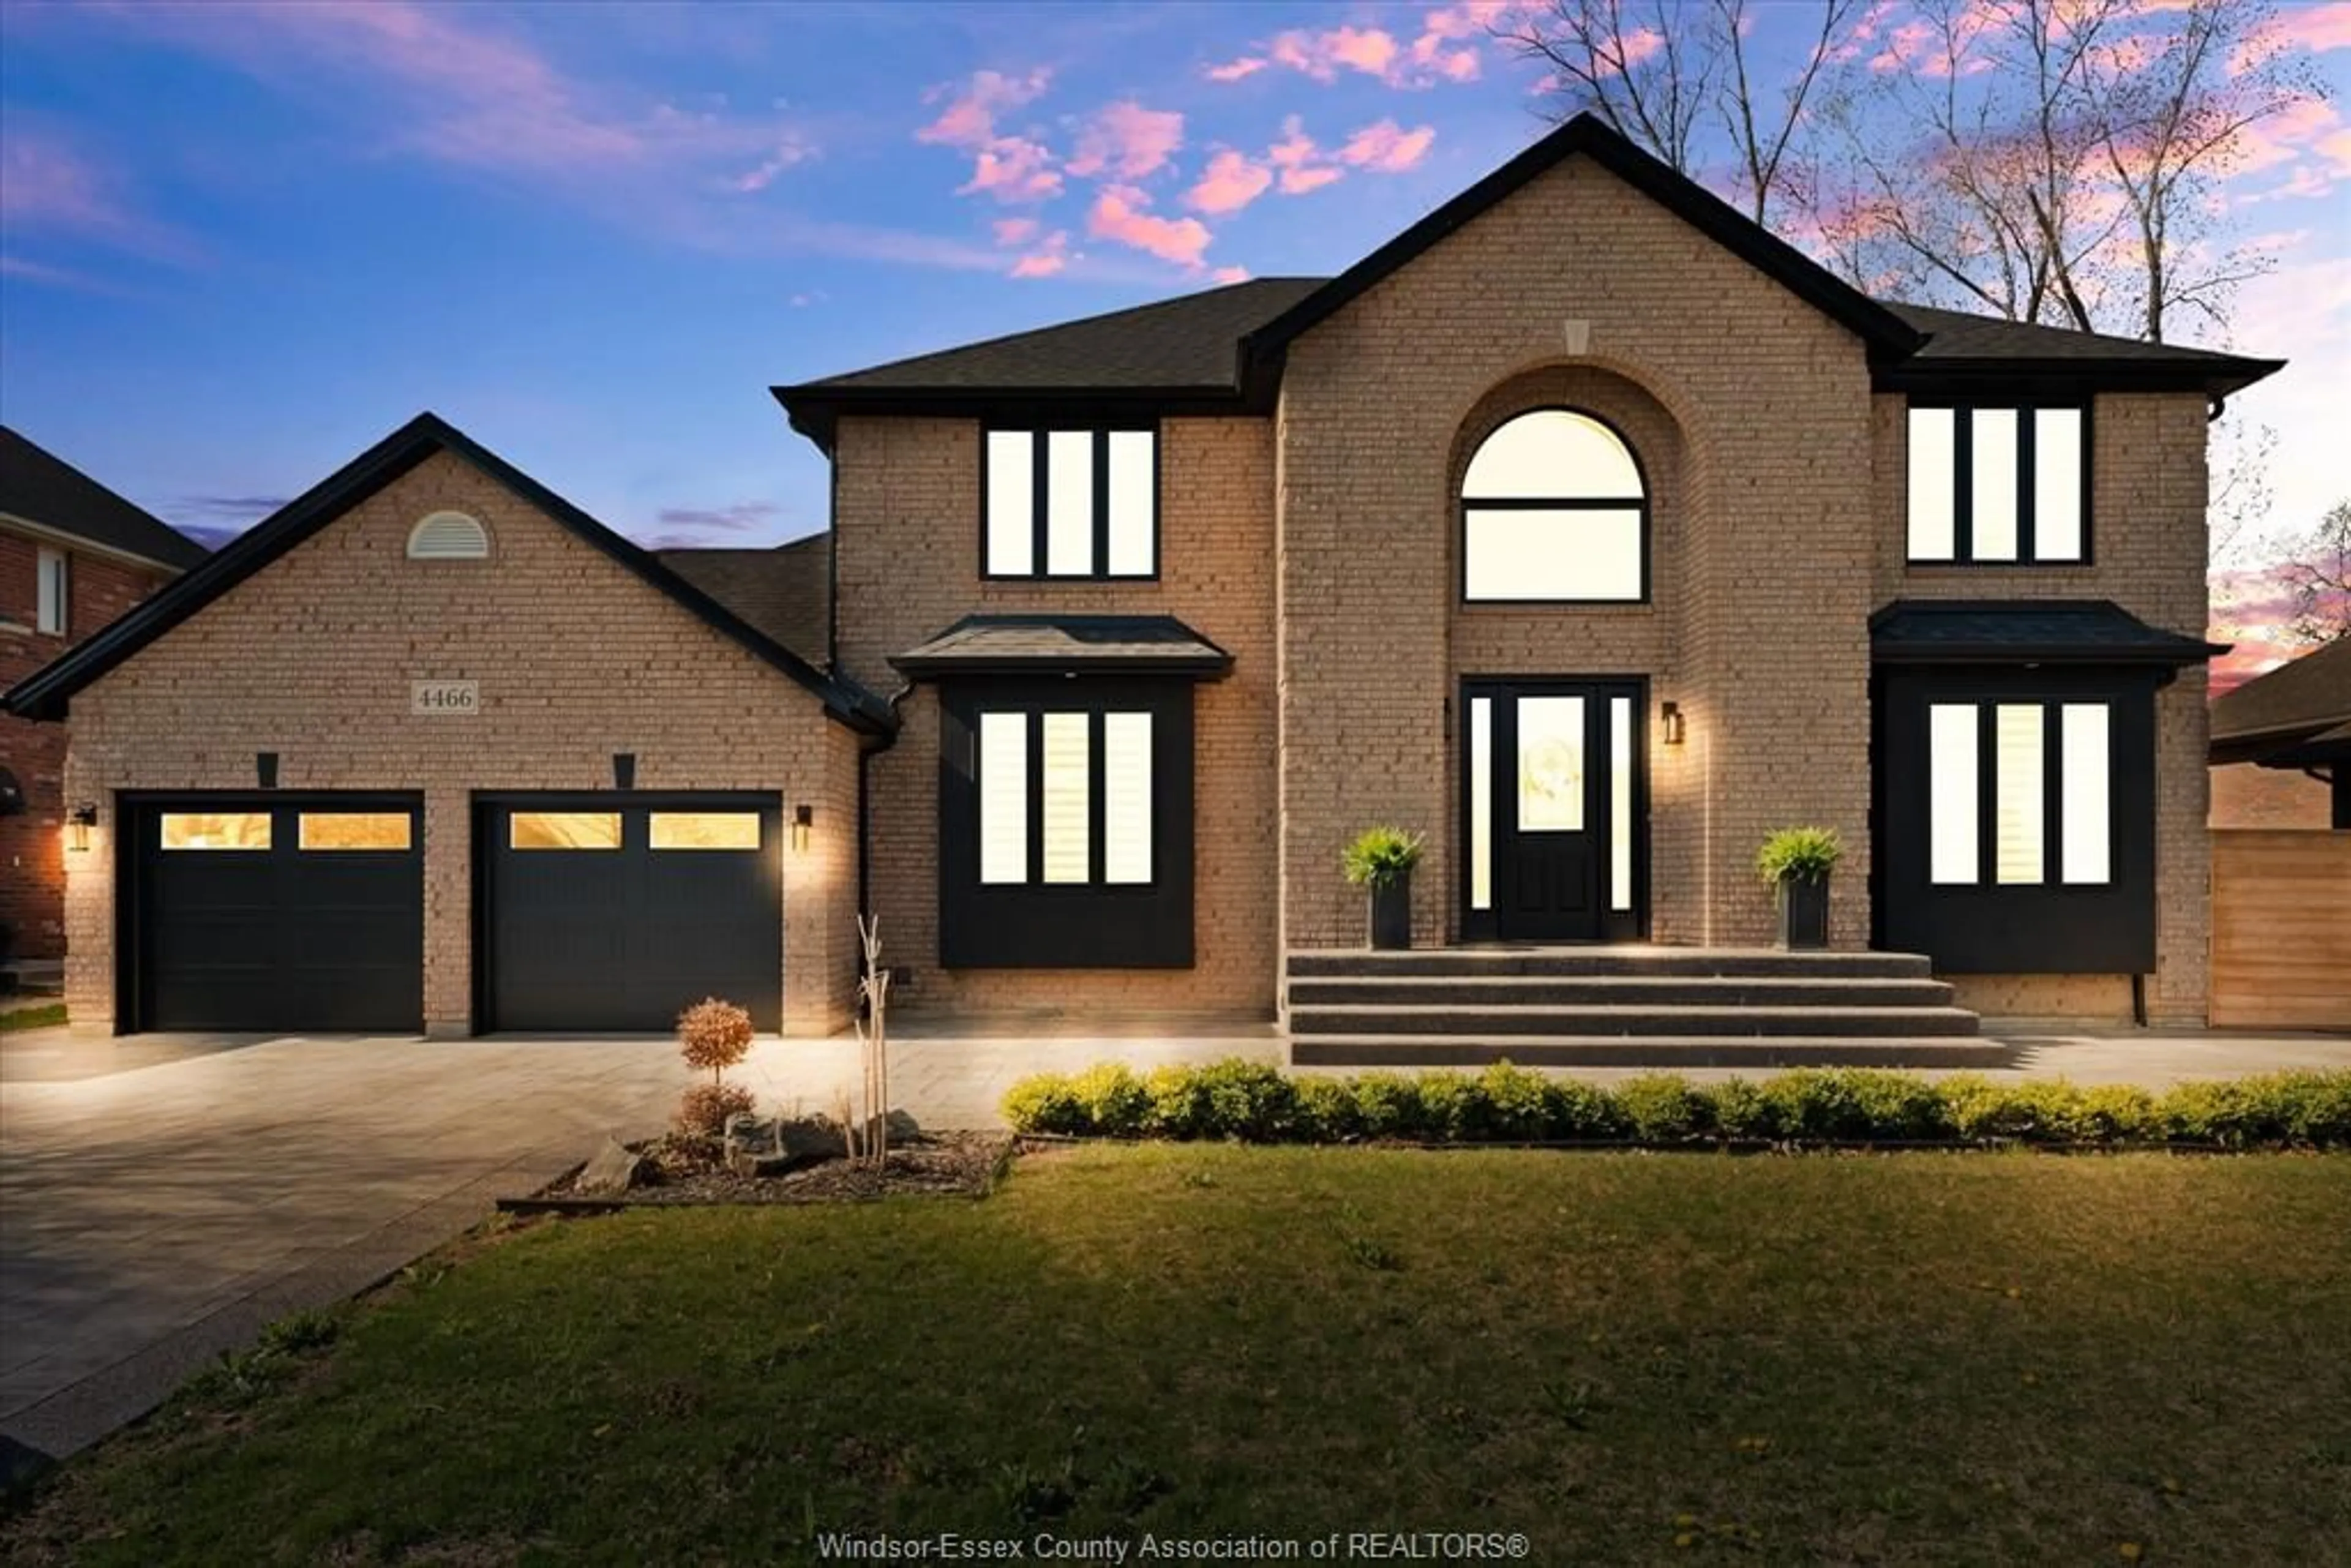 Home with brick exterior material for 4466 VILLA PARADISO Cir, Windsor Ontario N9G 2L7